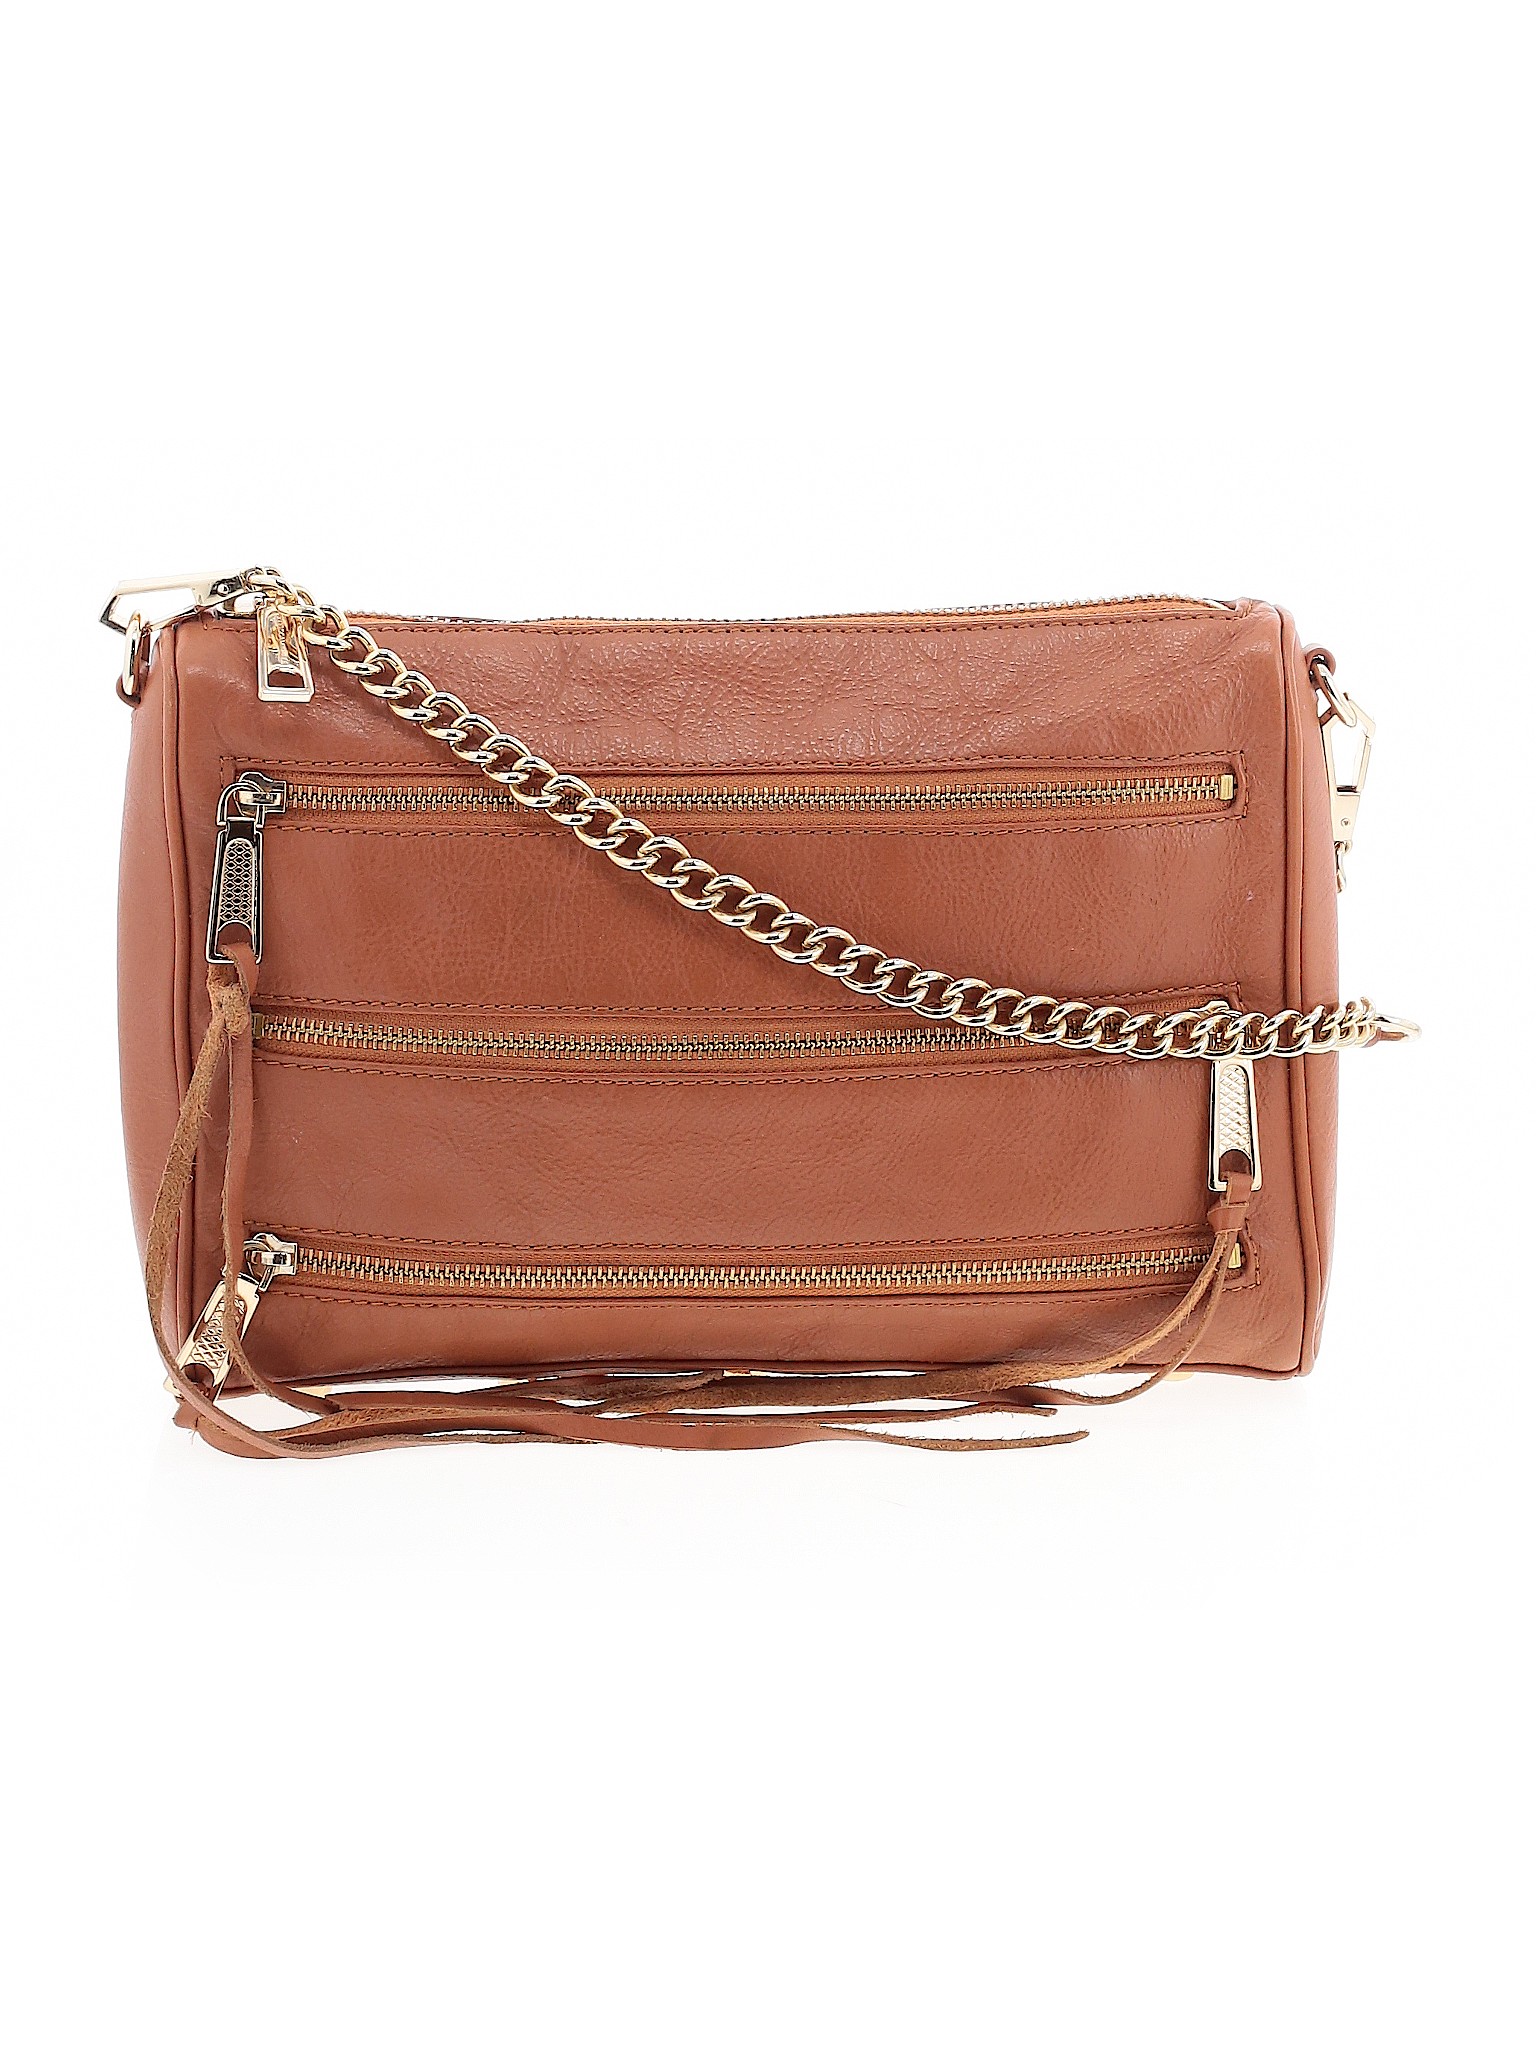 Rebecca Minkoff Women Brown Leather Crossbody Bag One Size | eBay